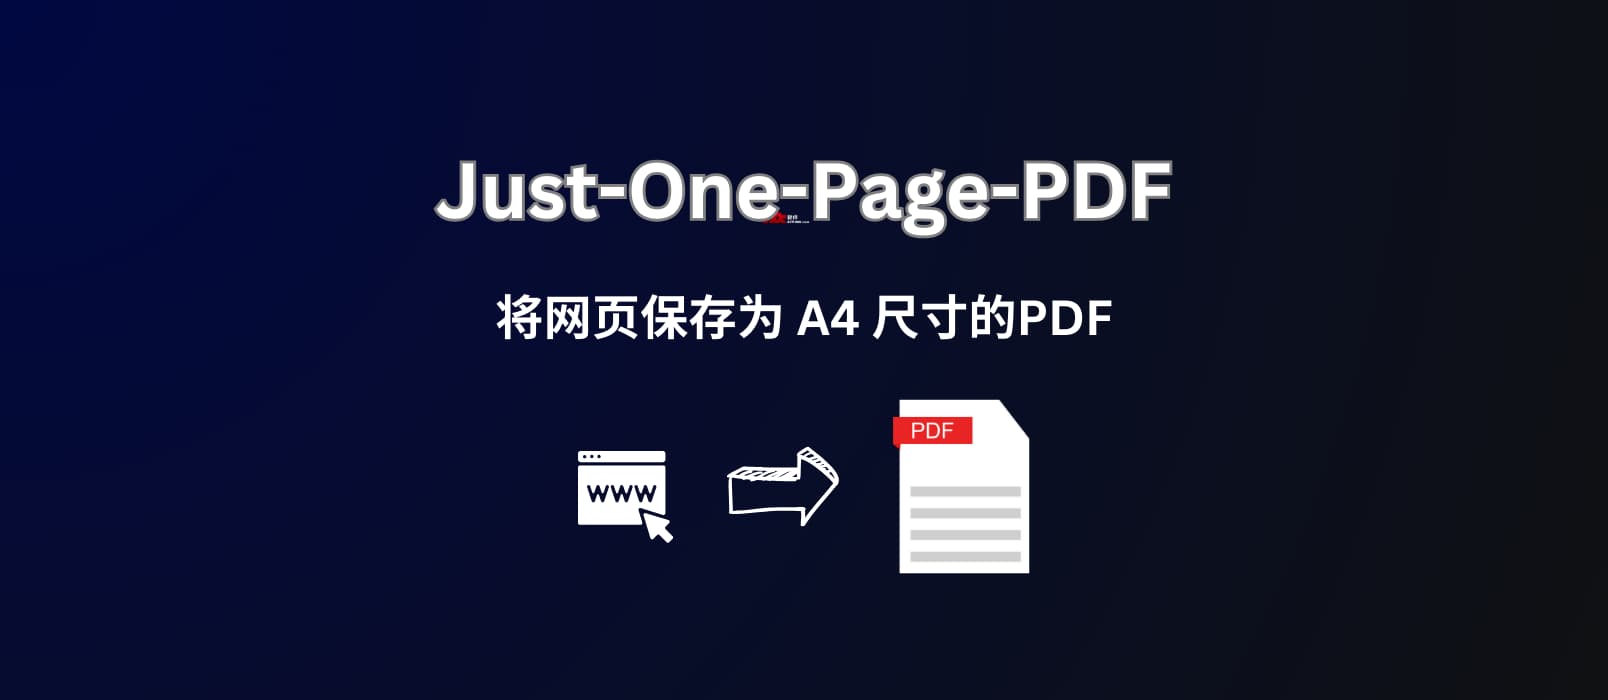 Just-One-Page-PDF - 将网页保存为 PDF：A4 尺寸，支持保存为一页或多页 PDF[Chrome]